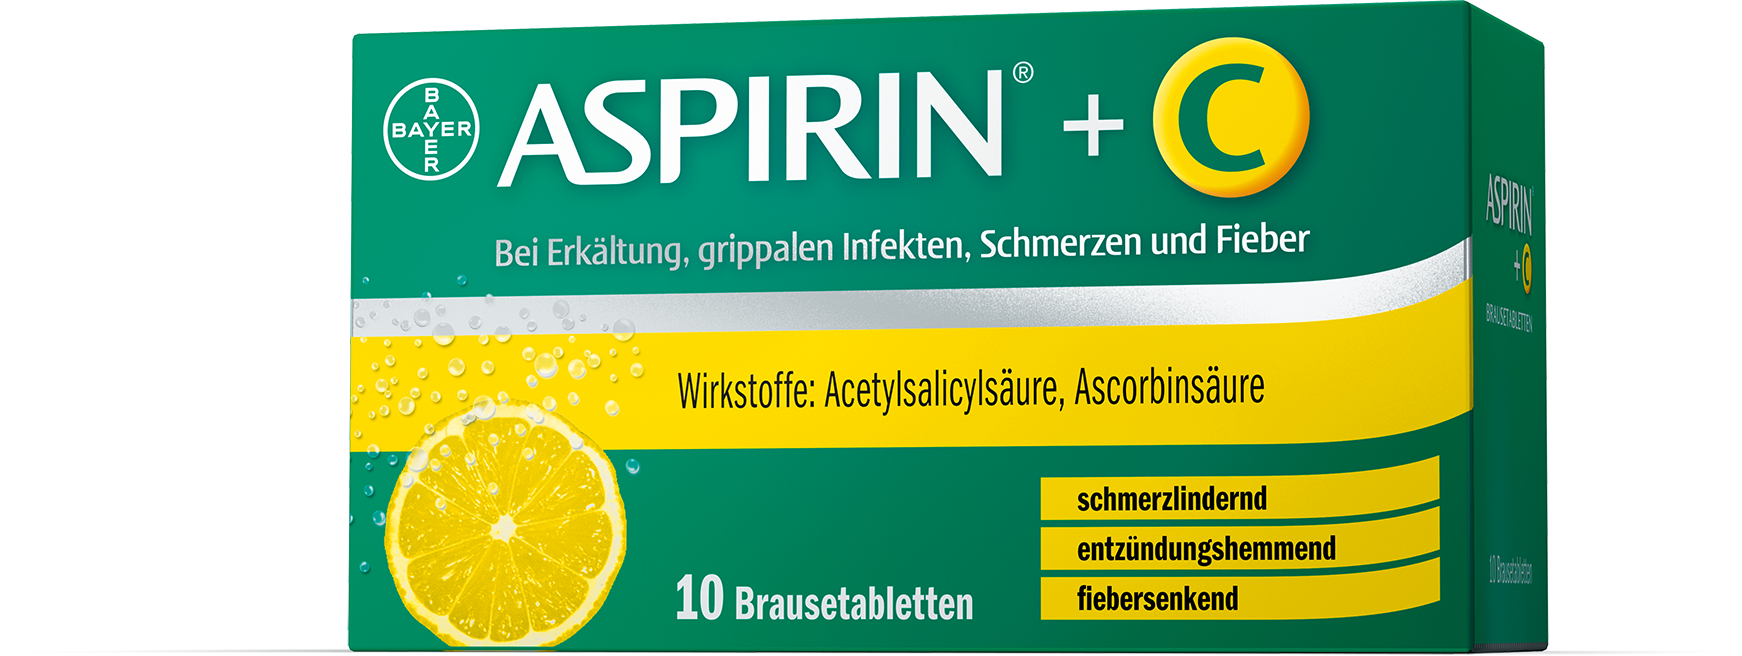 Aspirin+C - Brausetabletten